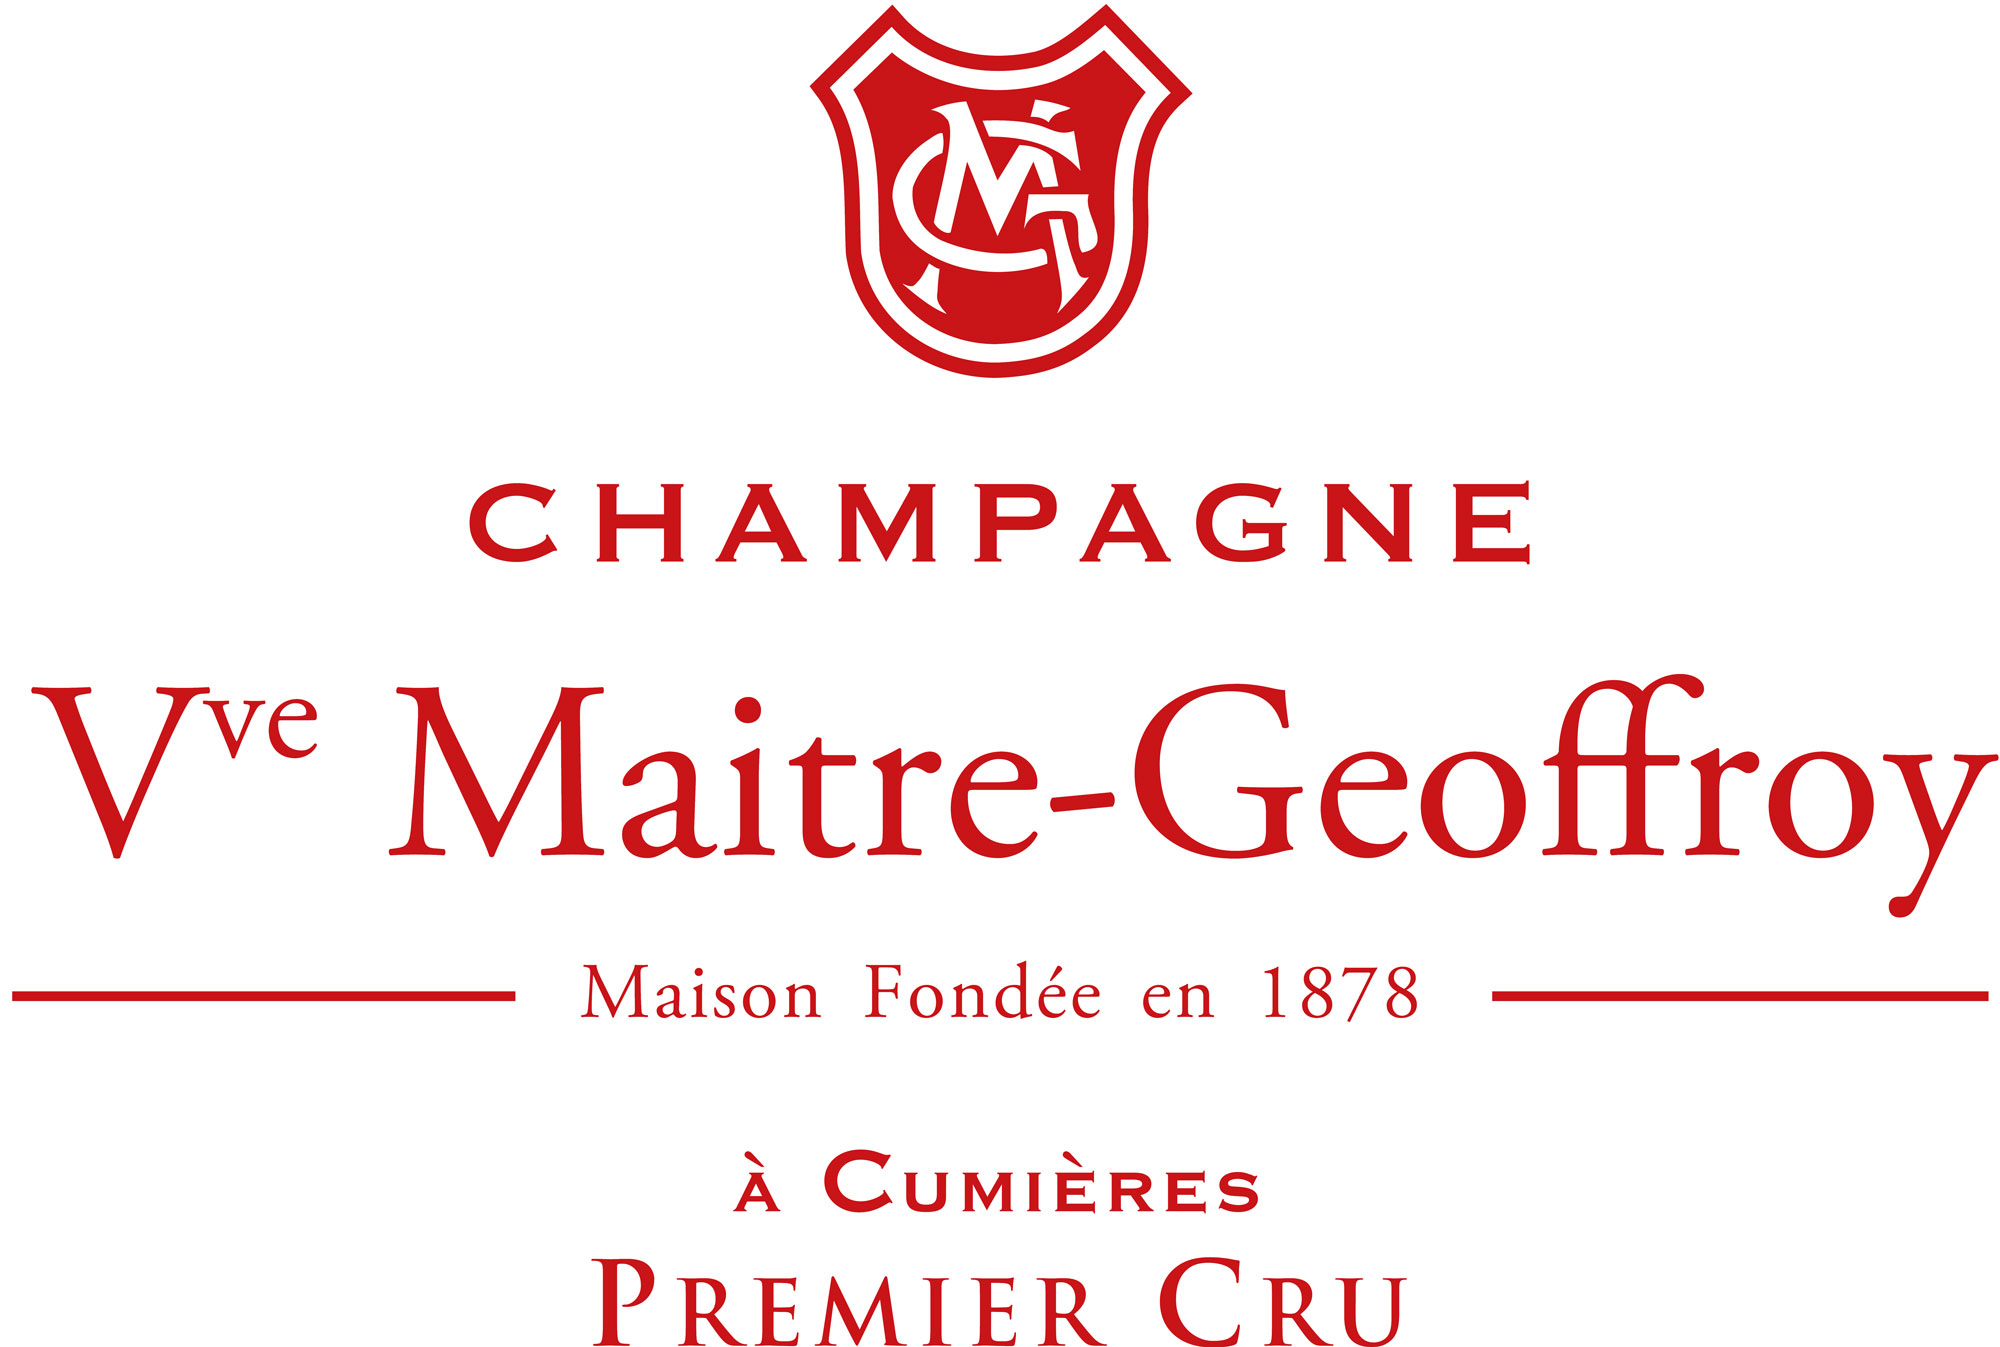 Champagne Veuve Maître-Geoffroy